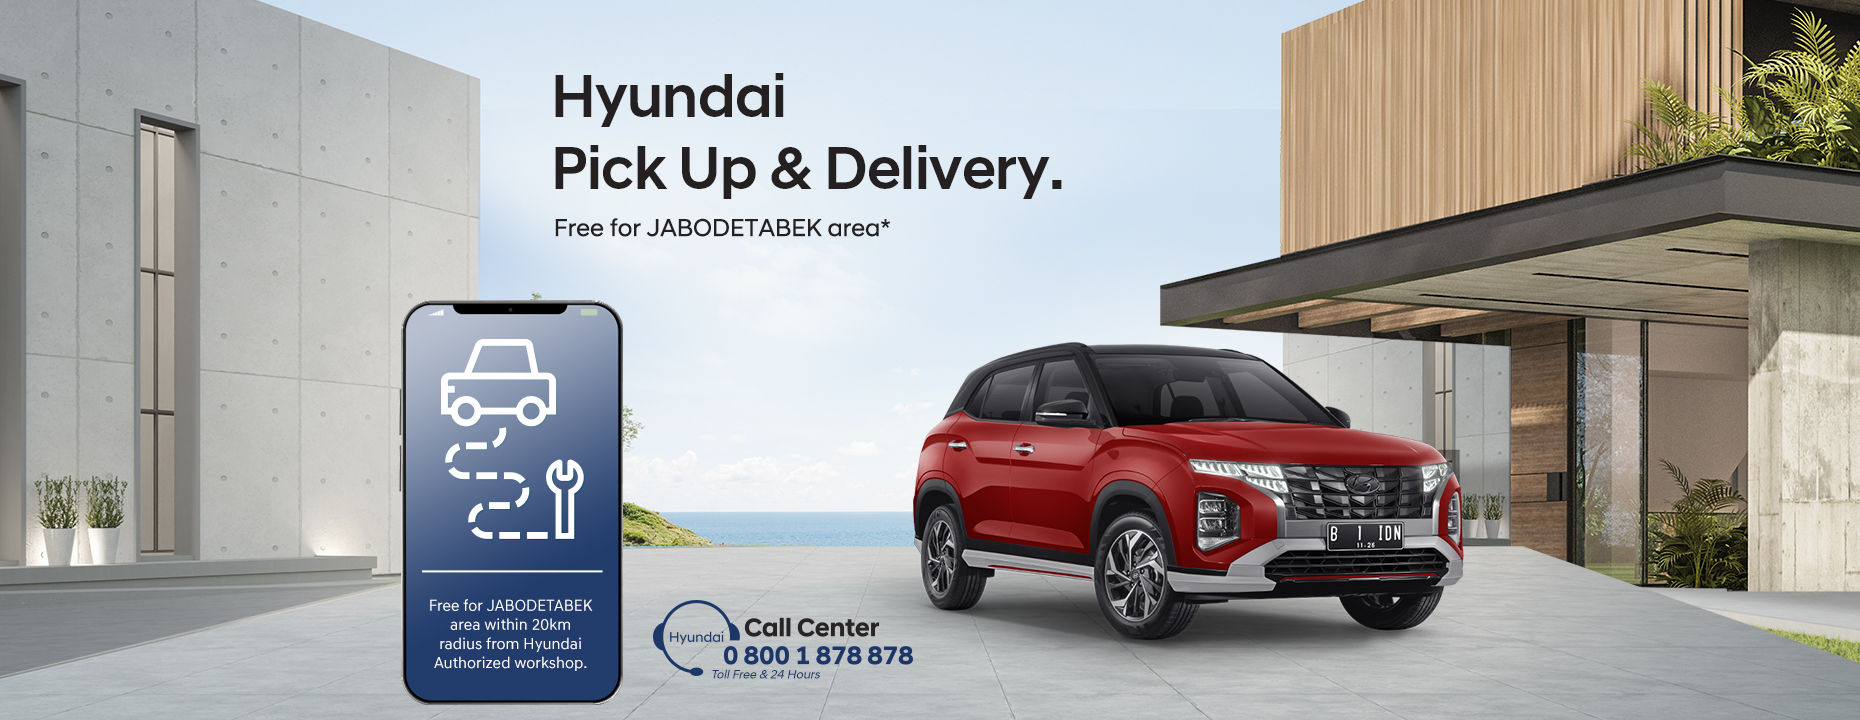 Hyundai Pickup Delivery